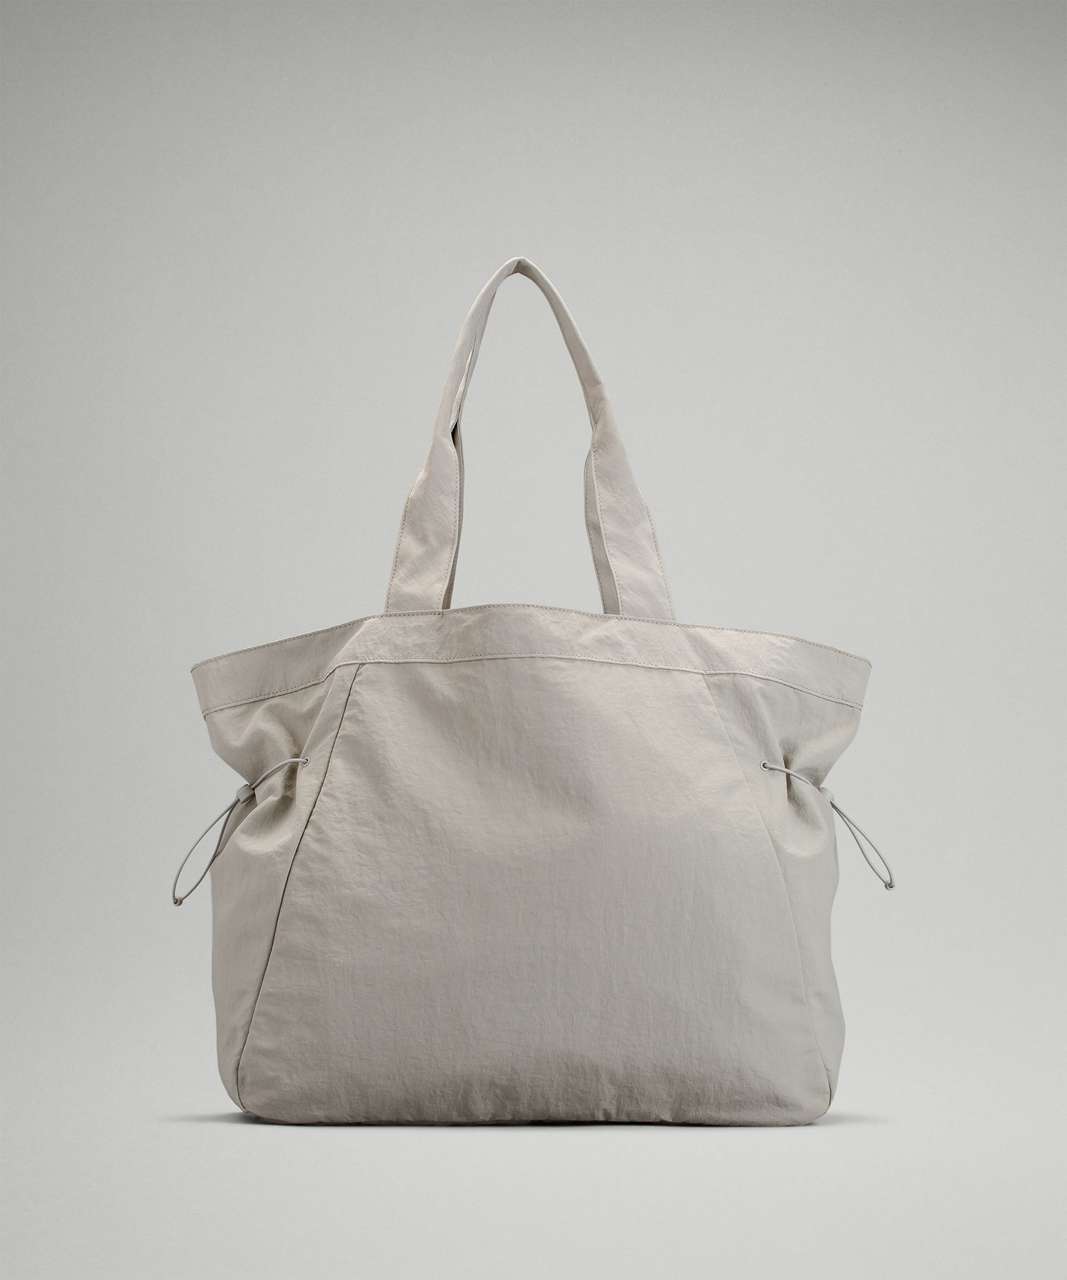 Lululemon bag - clothing & accessories - by owner - apparel sale -  craigslist